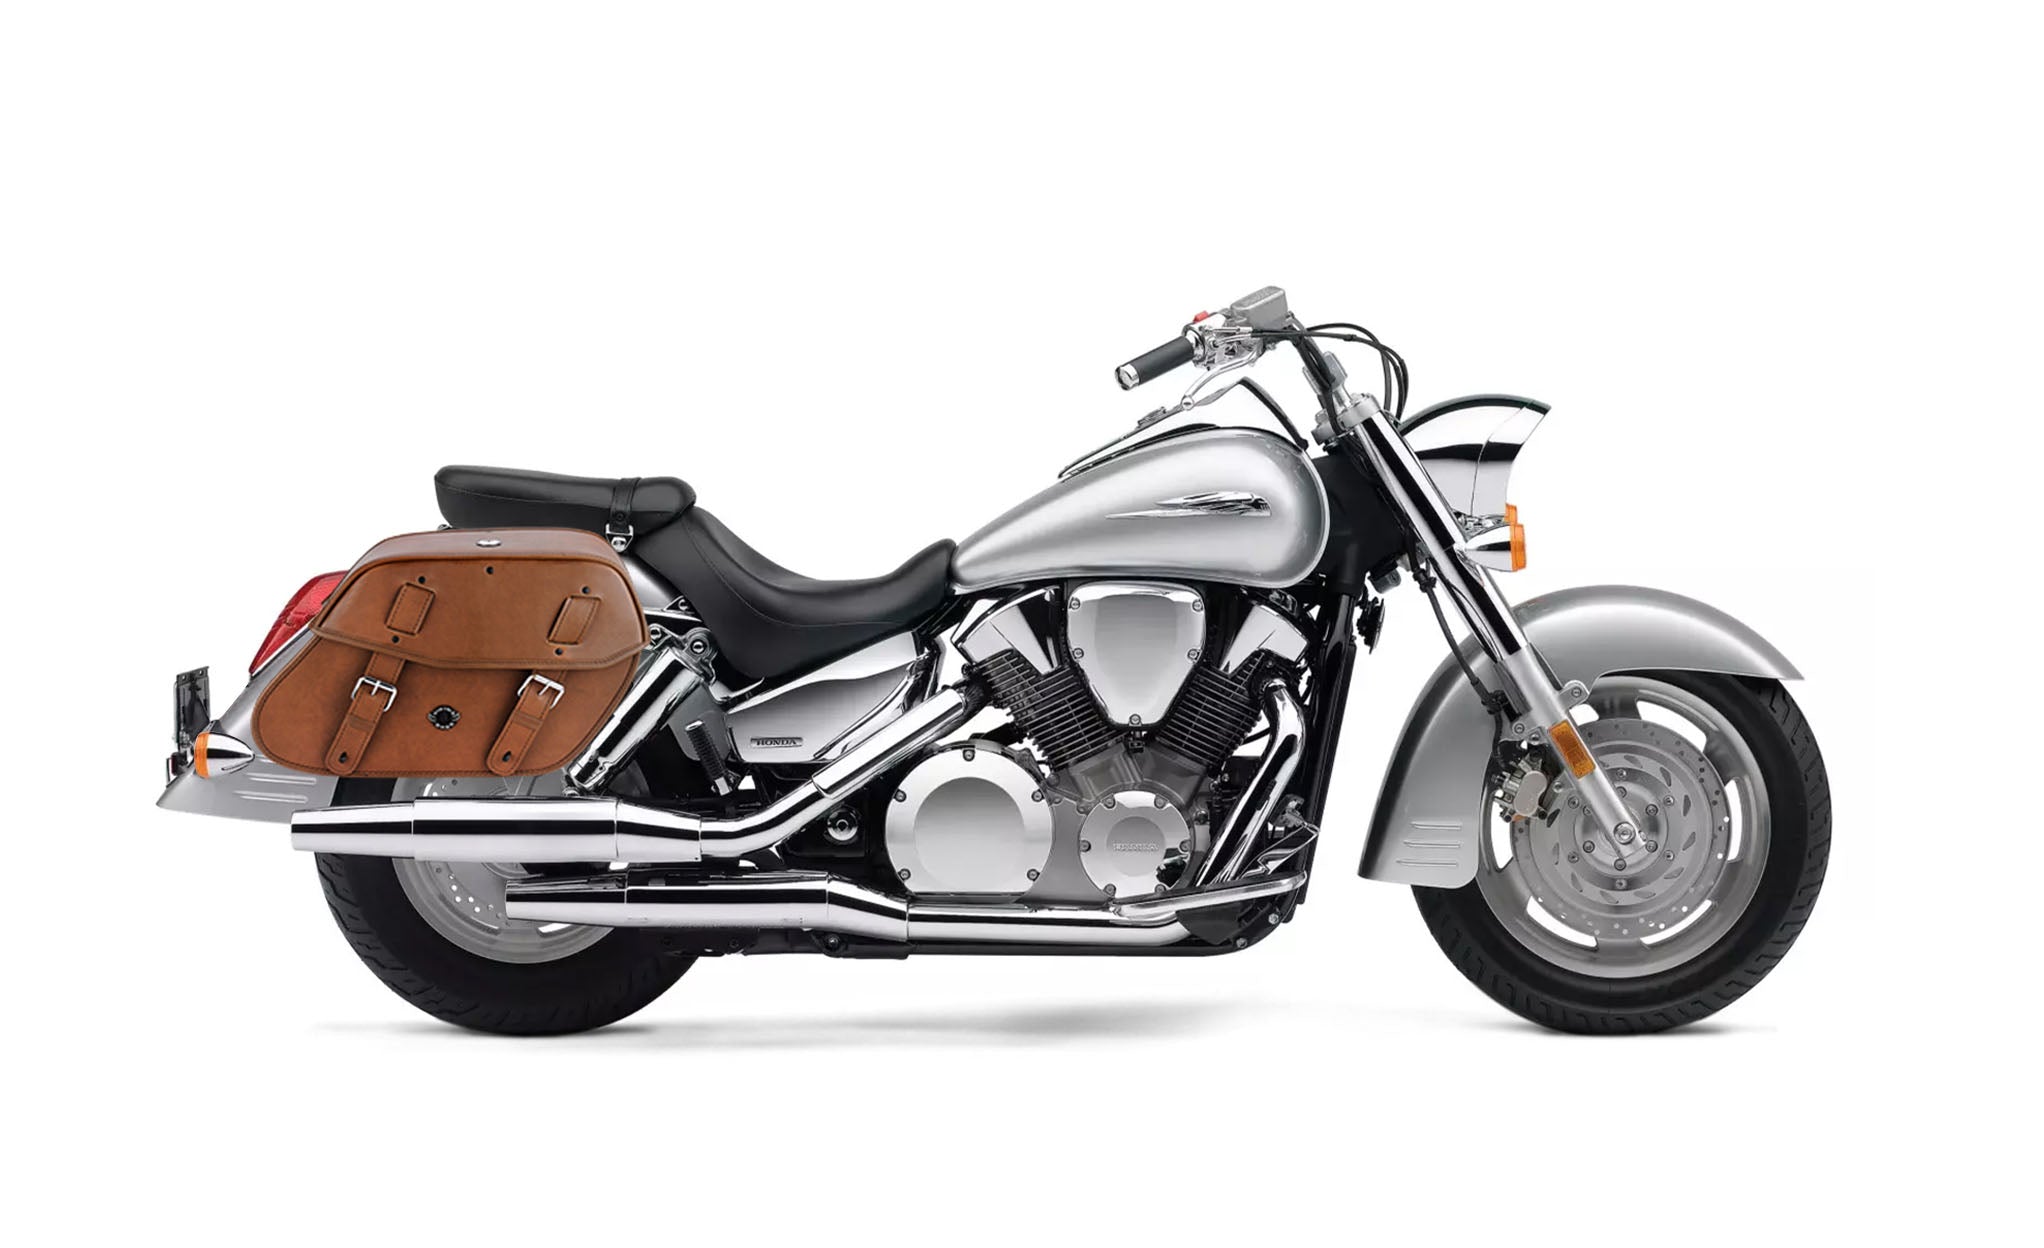 Viking Odin Brown Large Honda Vtx 1300 S Leather Motorcycle Saddlebags on Bike Photo @expand